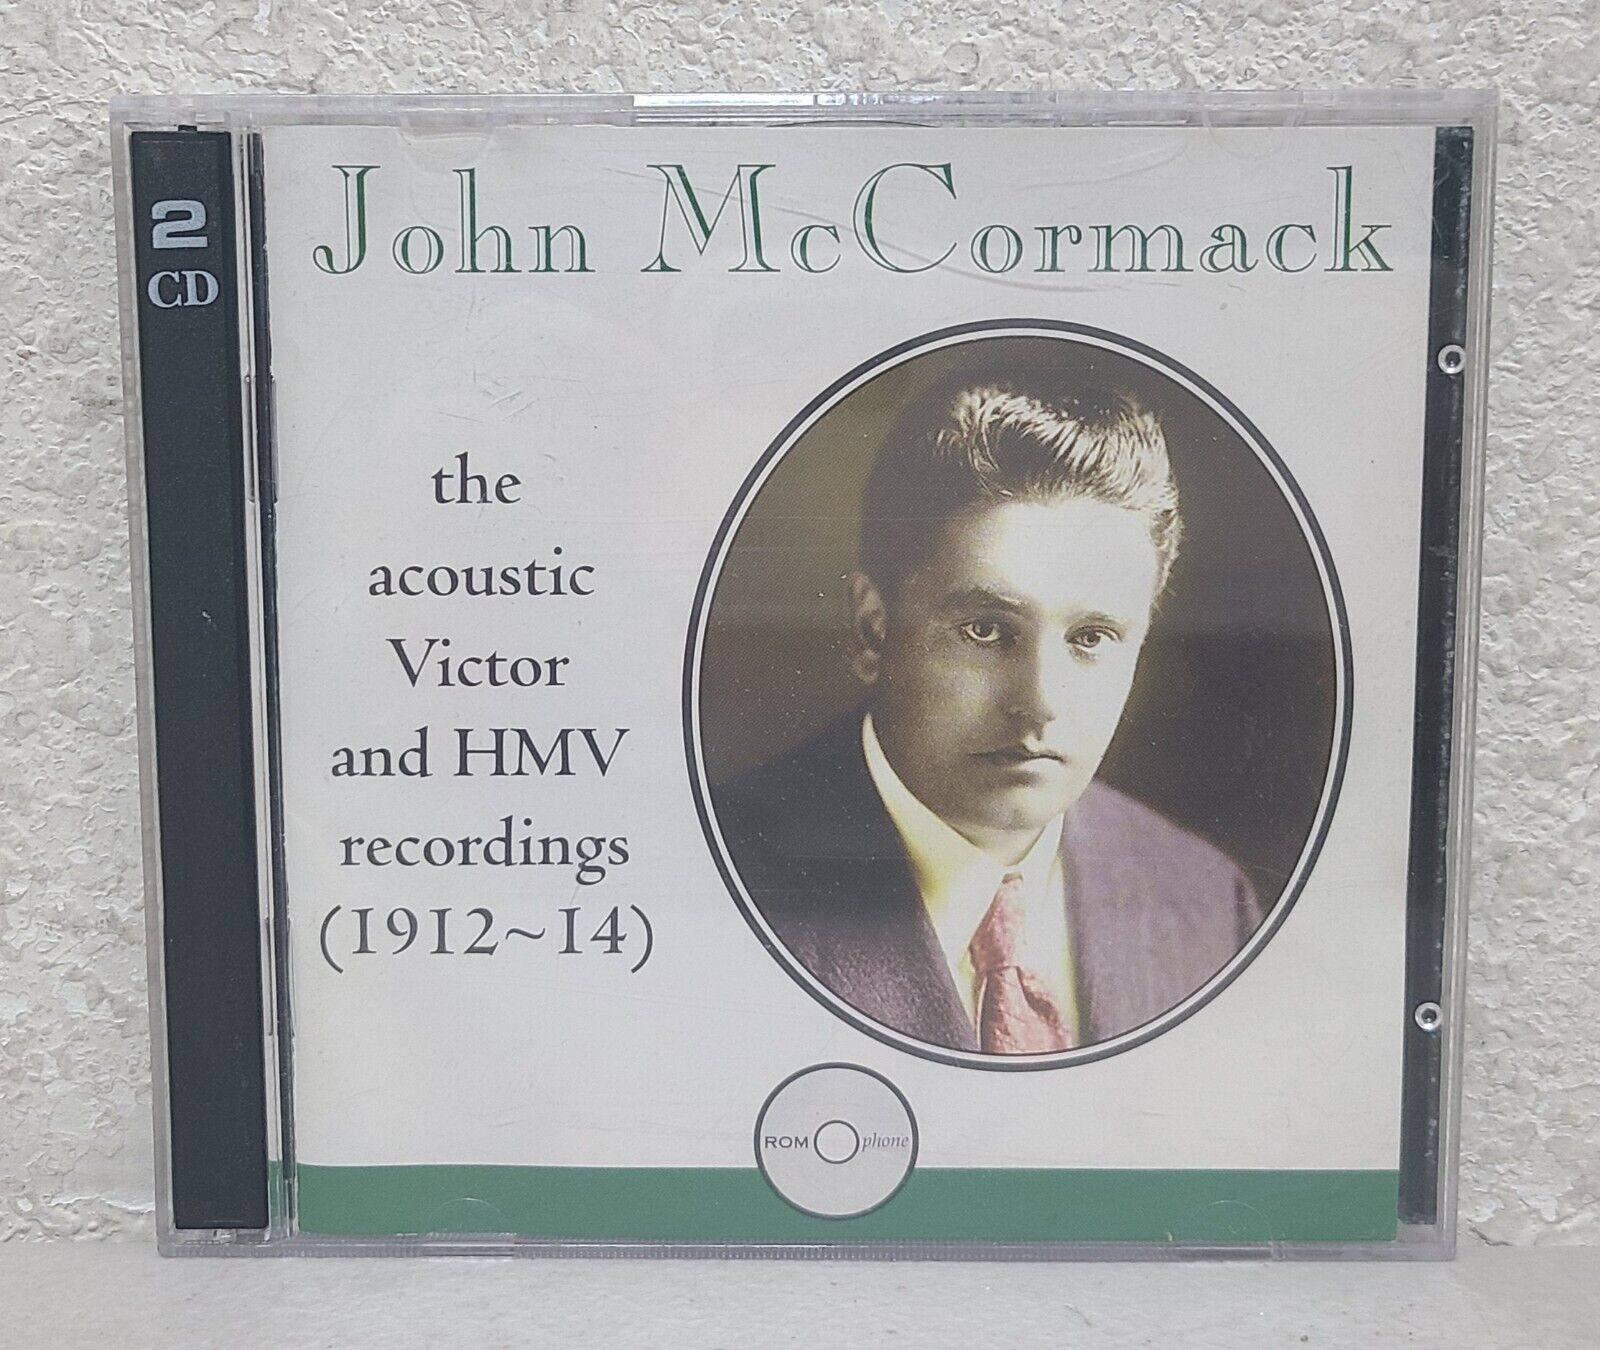 John McCormack Acoustic Victor HMV Recordings 1912-14 2 CD Set 1997 Romophone